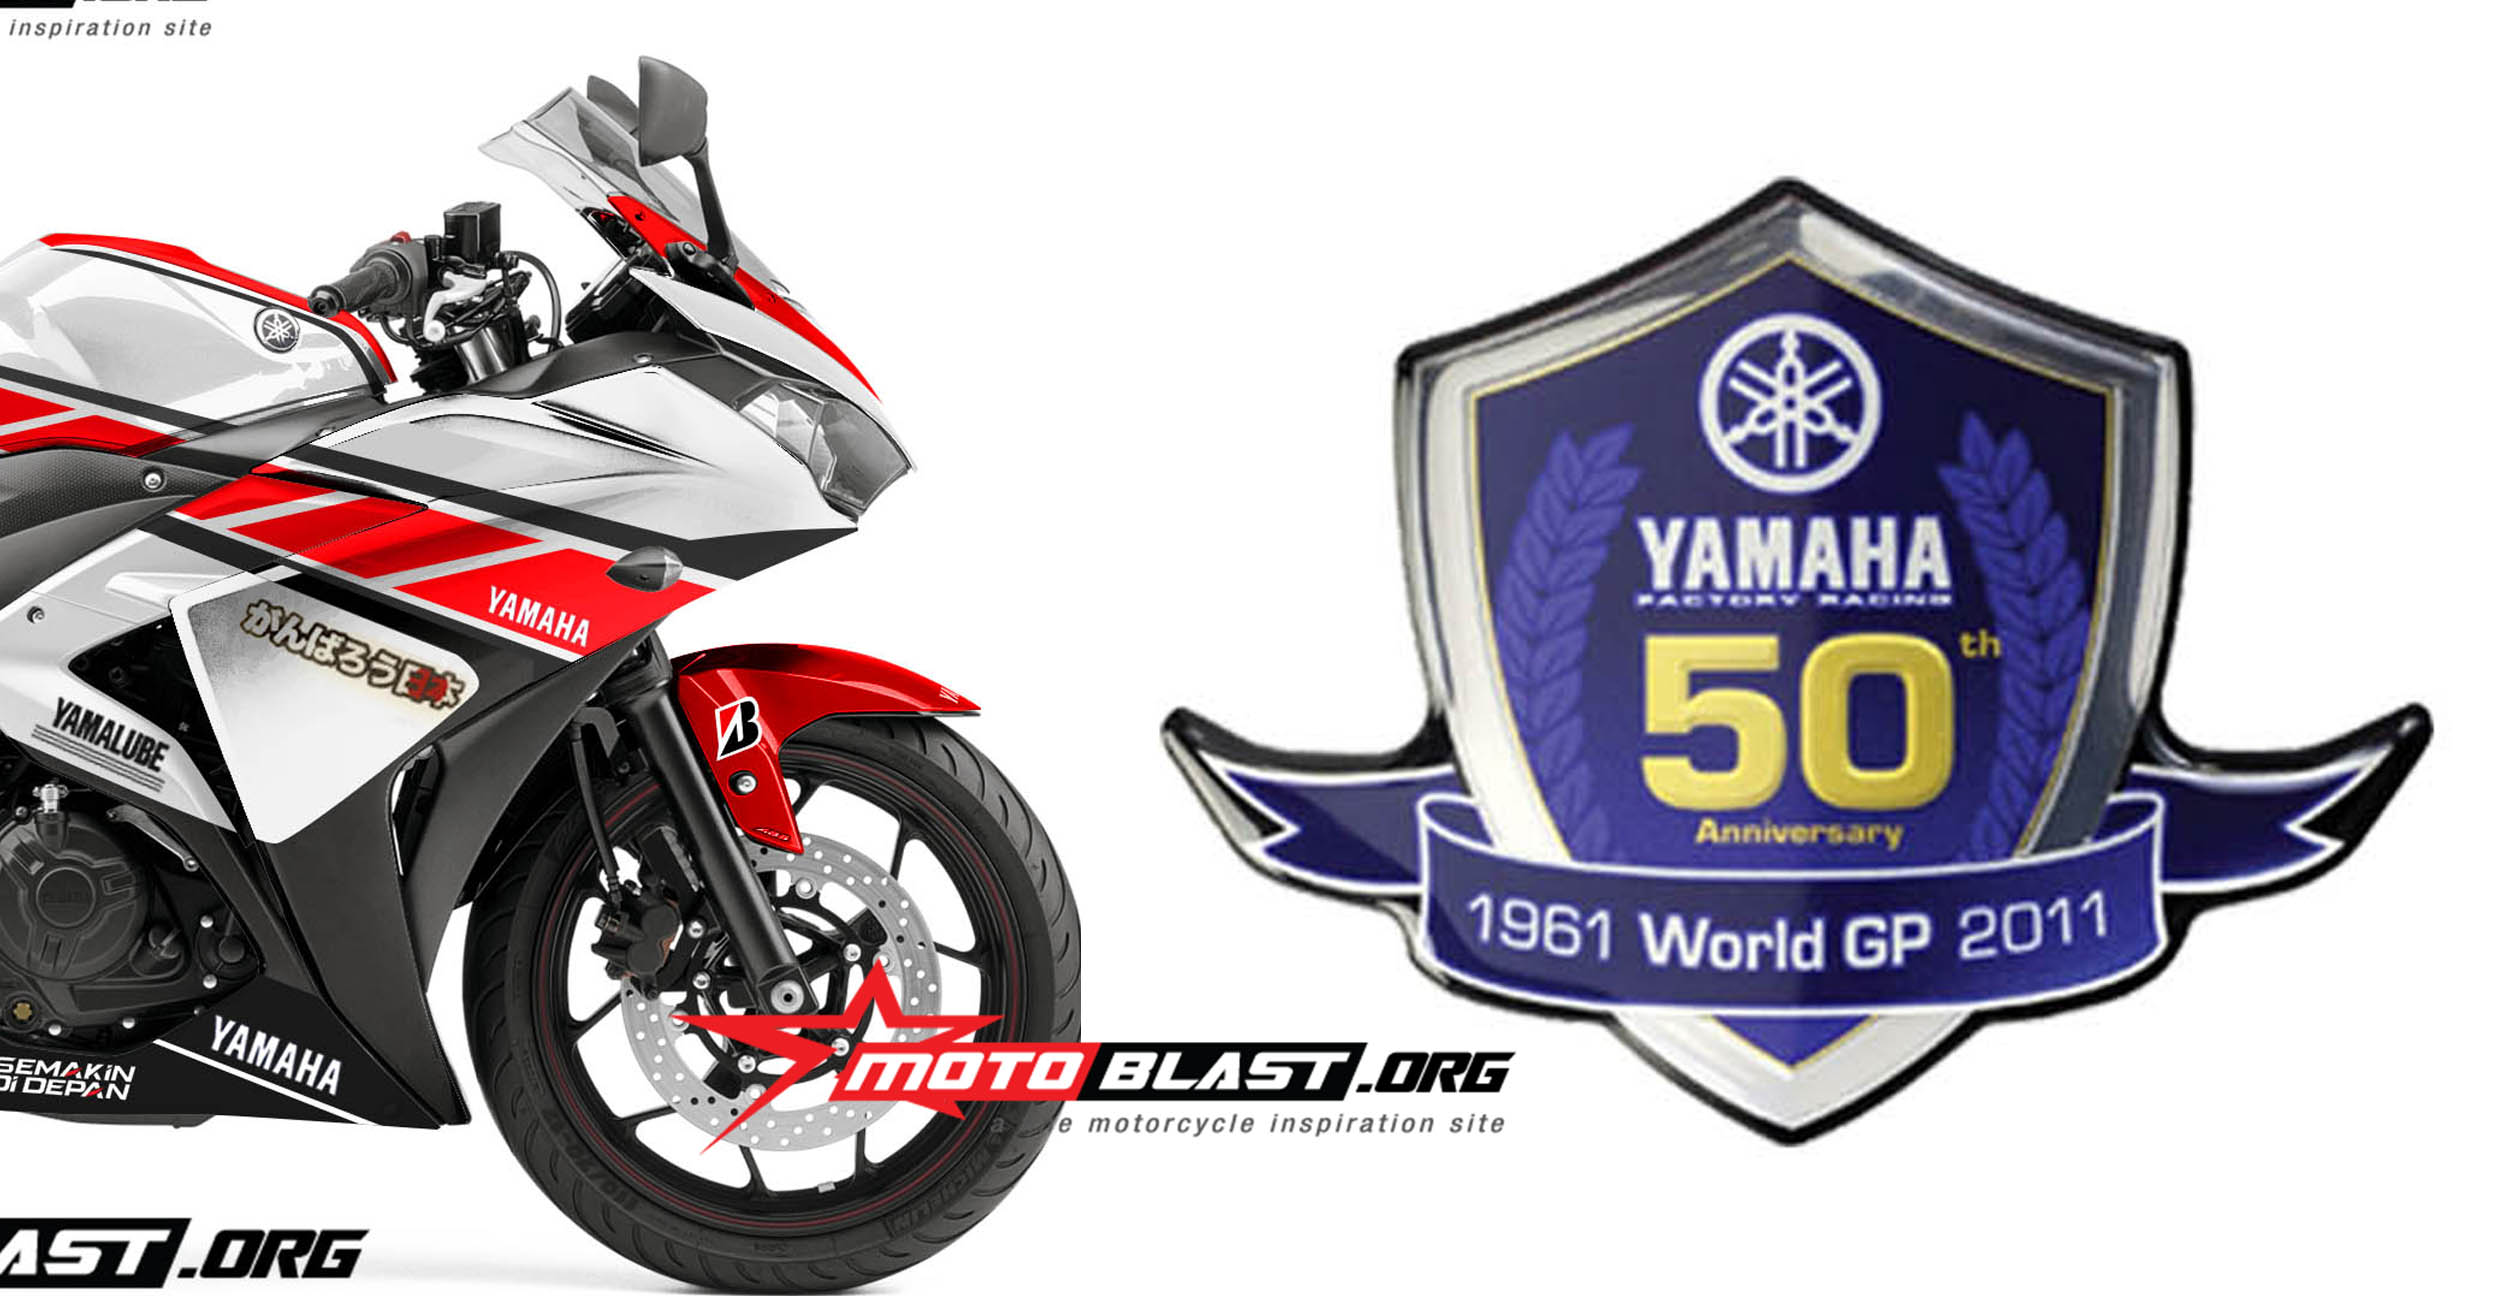 Modif Striping Yamaha R25 50th Anniversary Special Edition